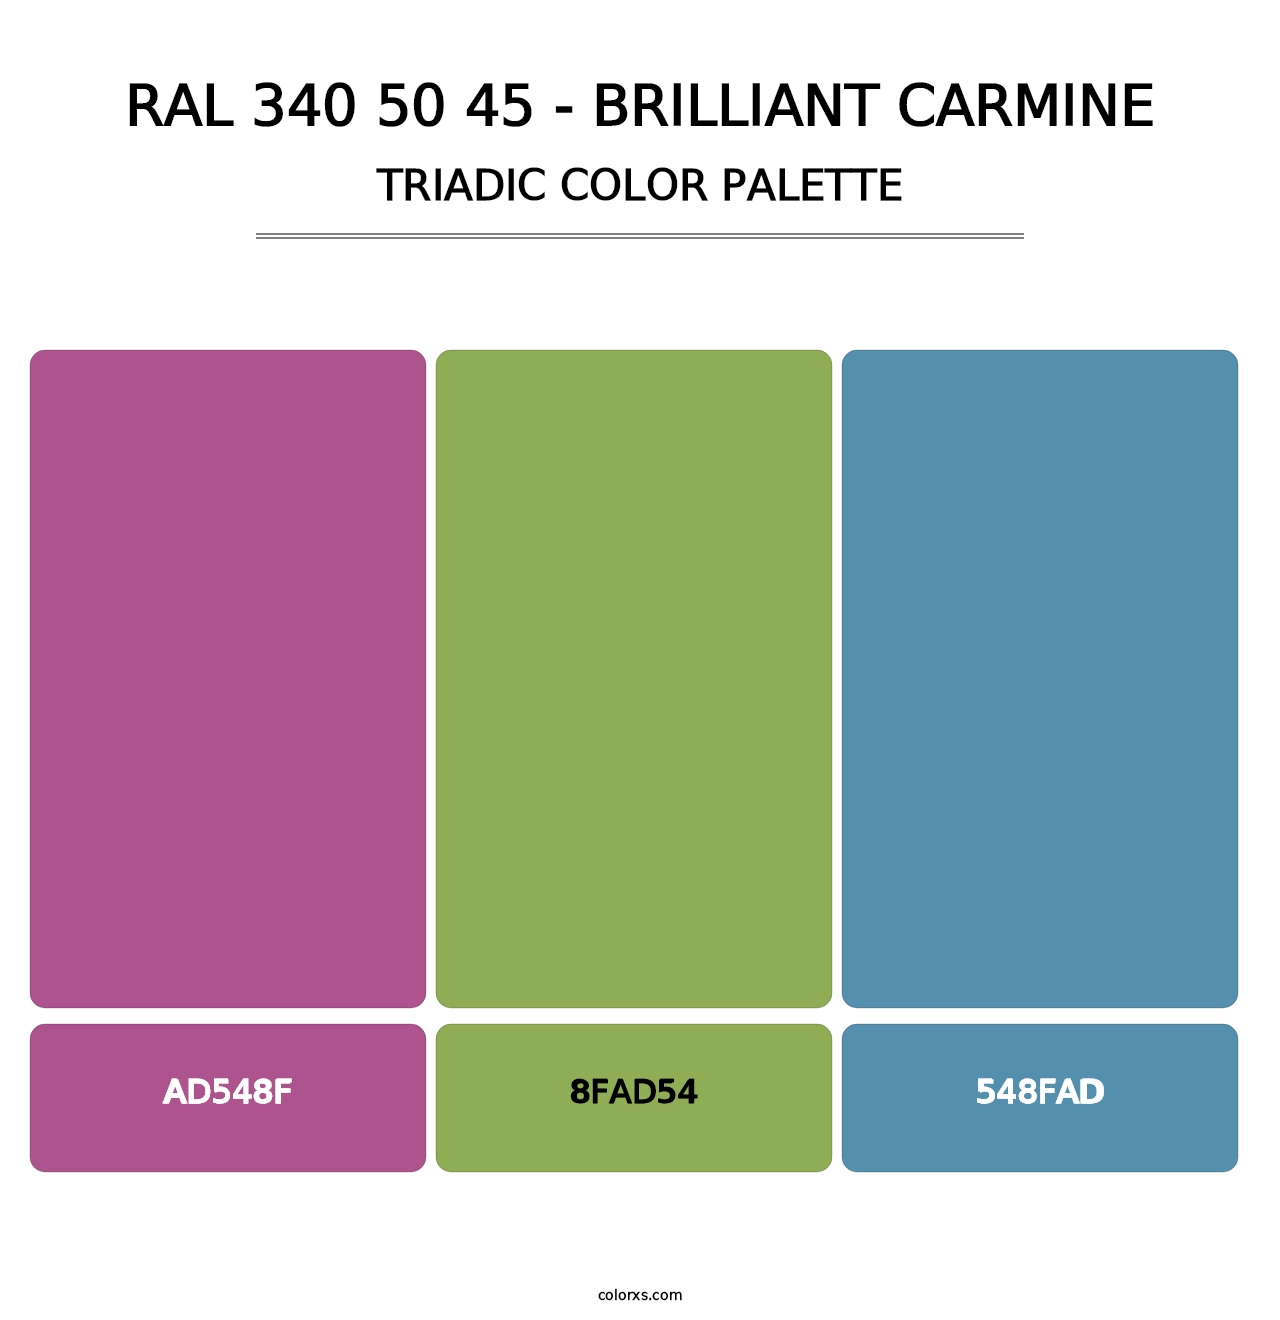 RAL 340 50 45 - Brilliant Carmine - Triadic Color Palette